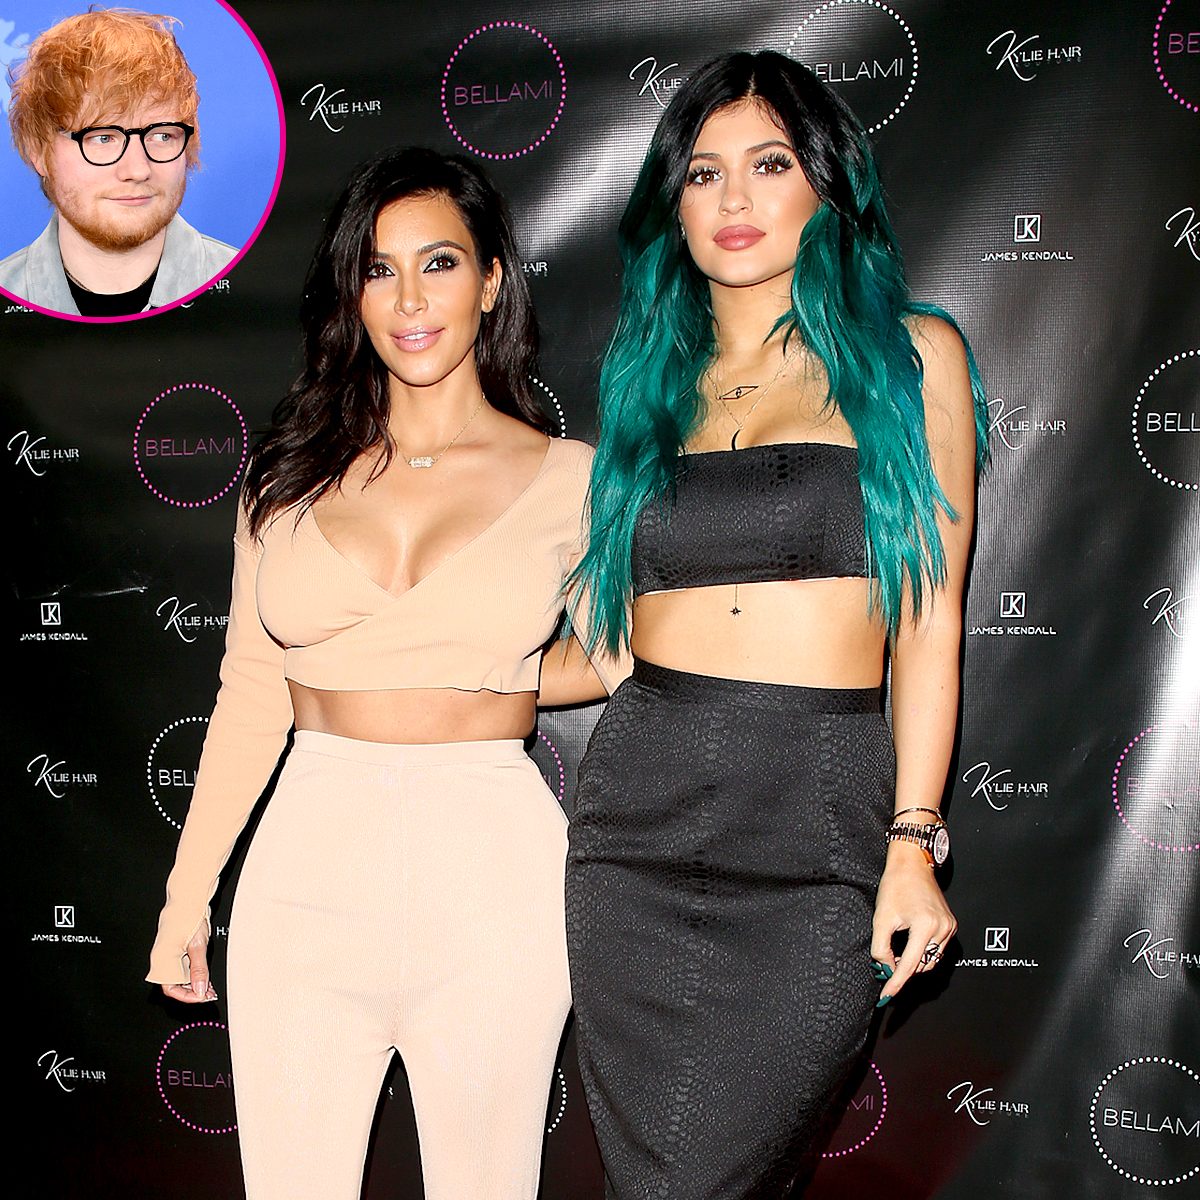 11 Songs With Lyrics Mentioning the Kardashian-Jenners